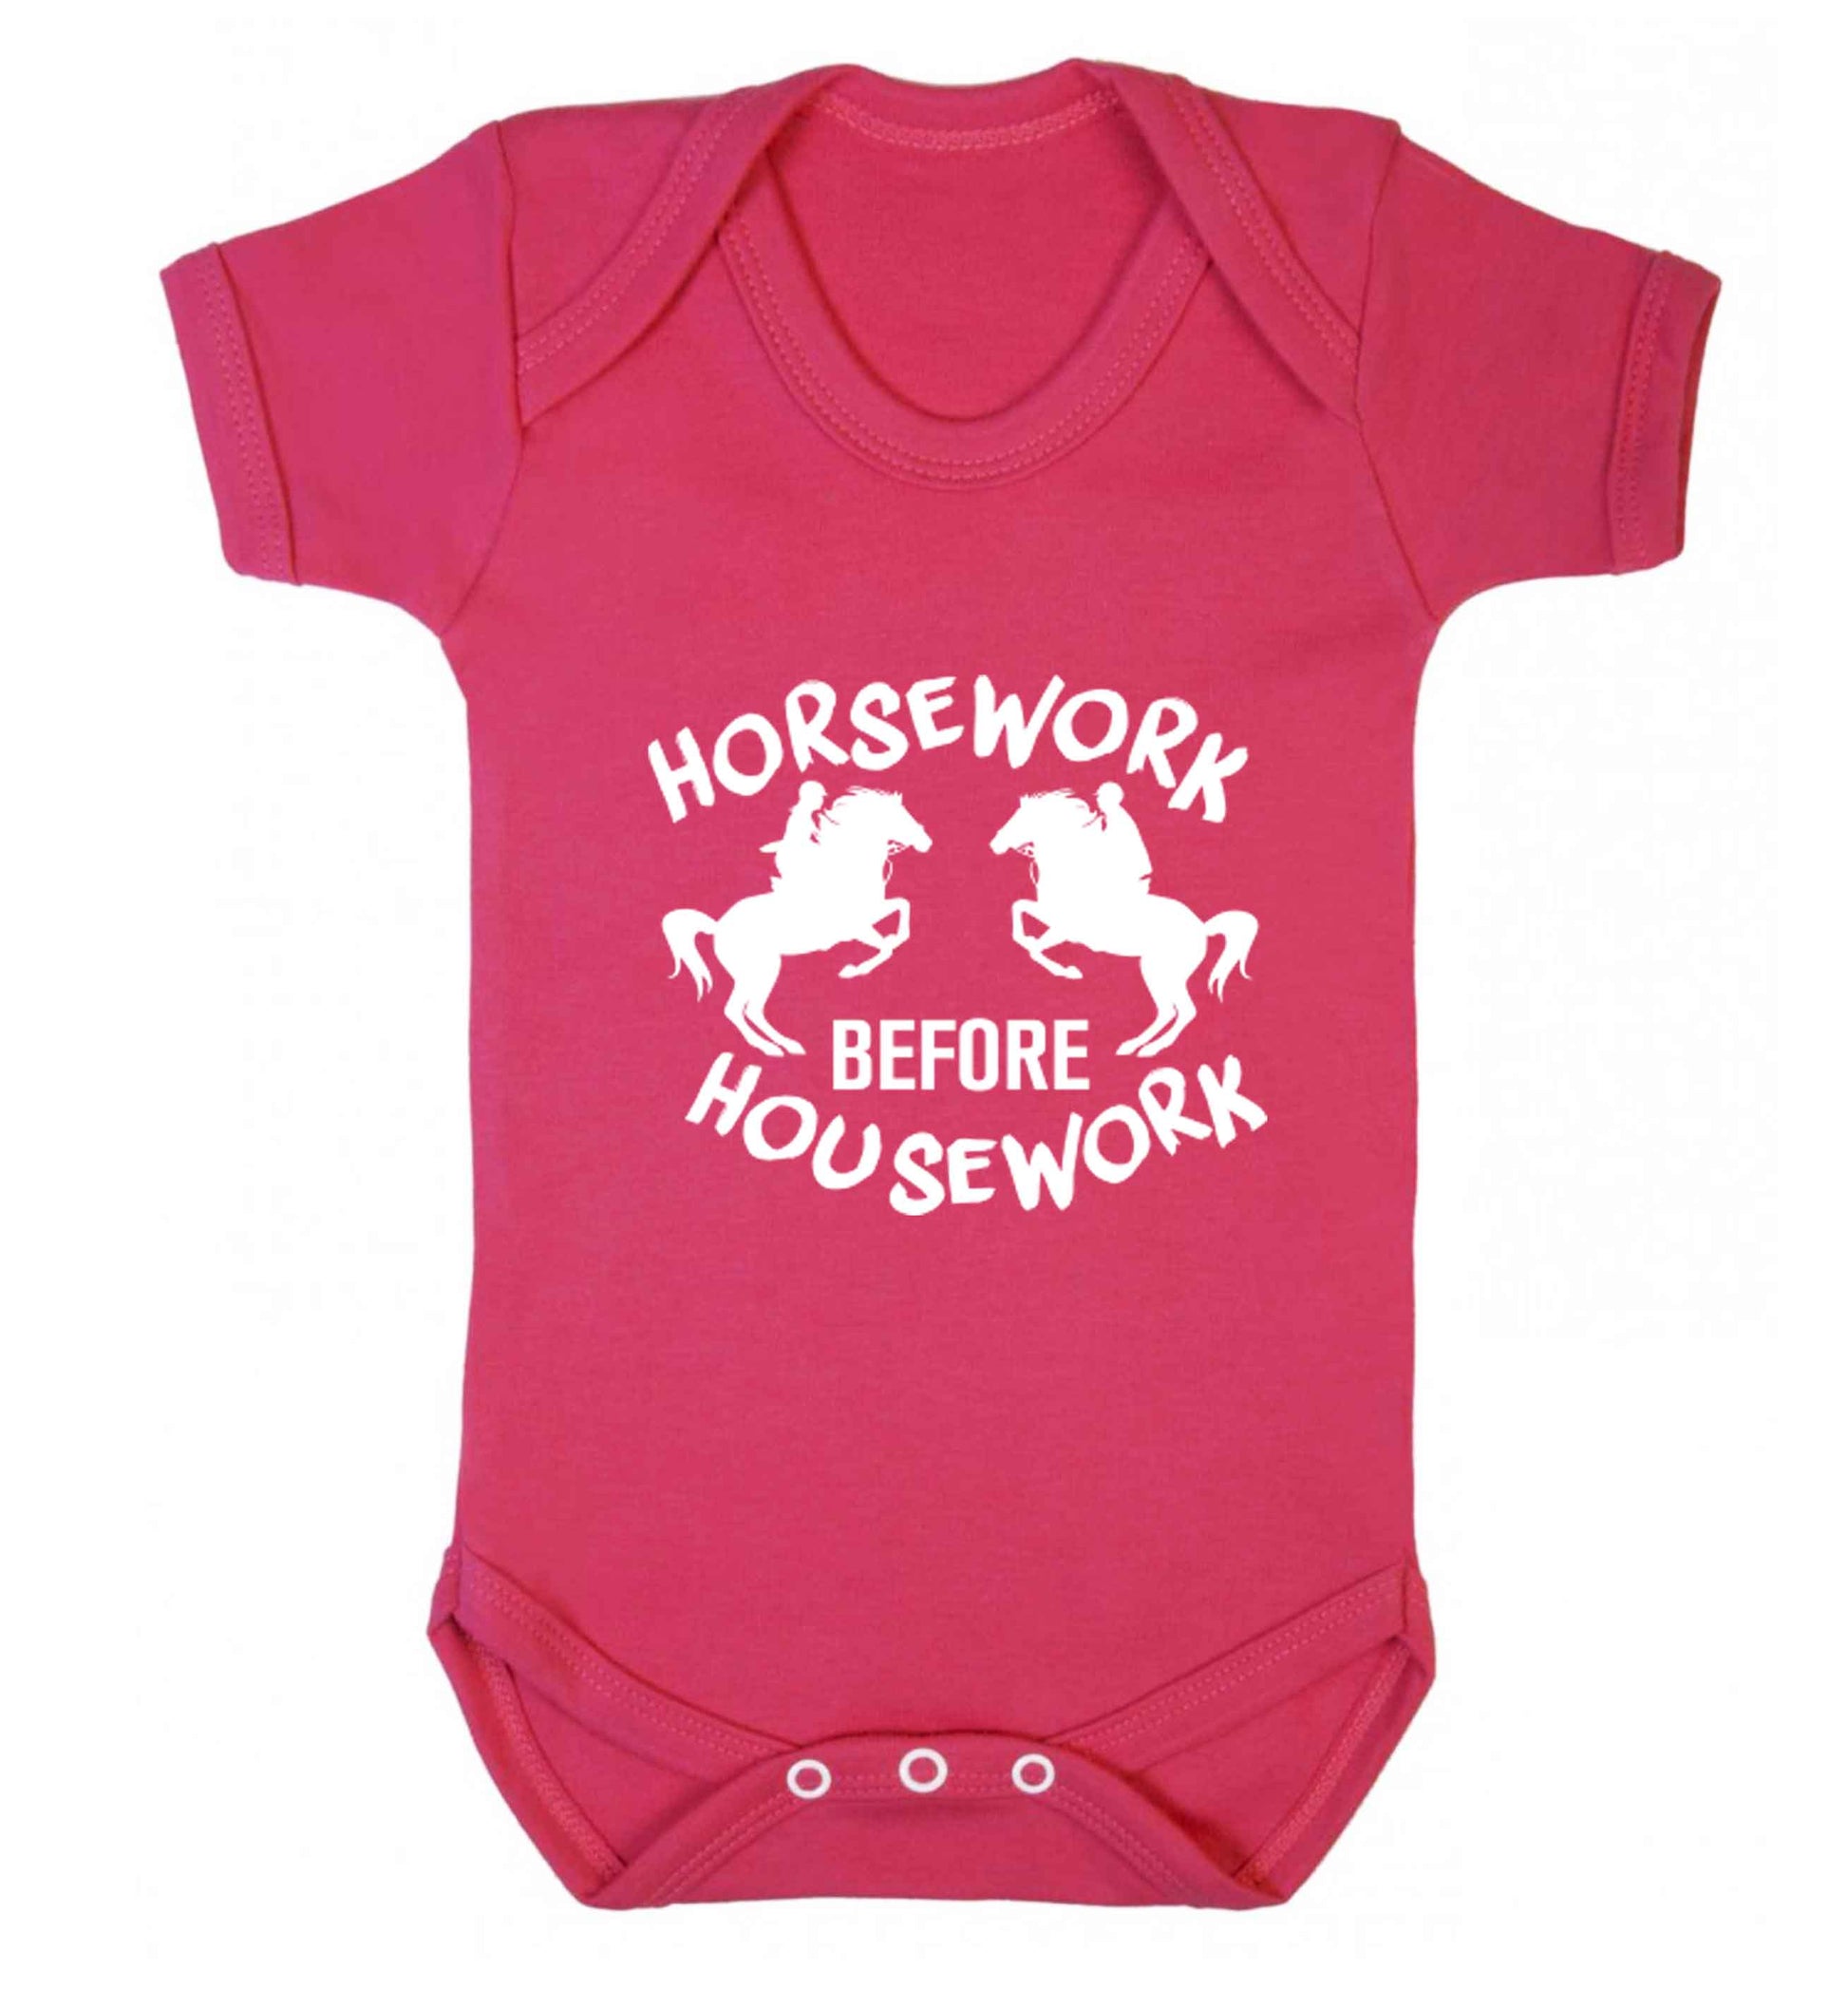 Horsework before housework baby vest dark pink 18-24 months